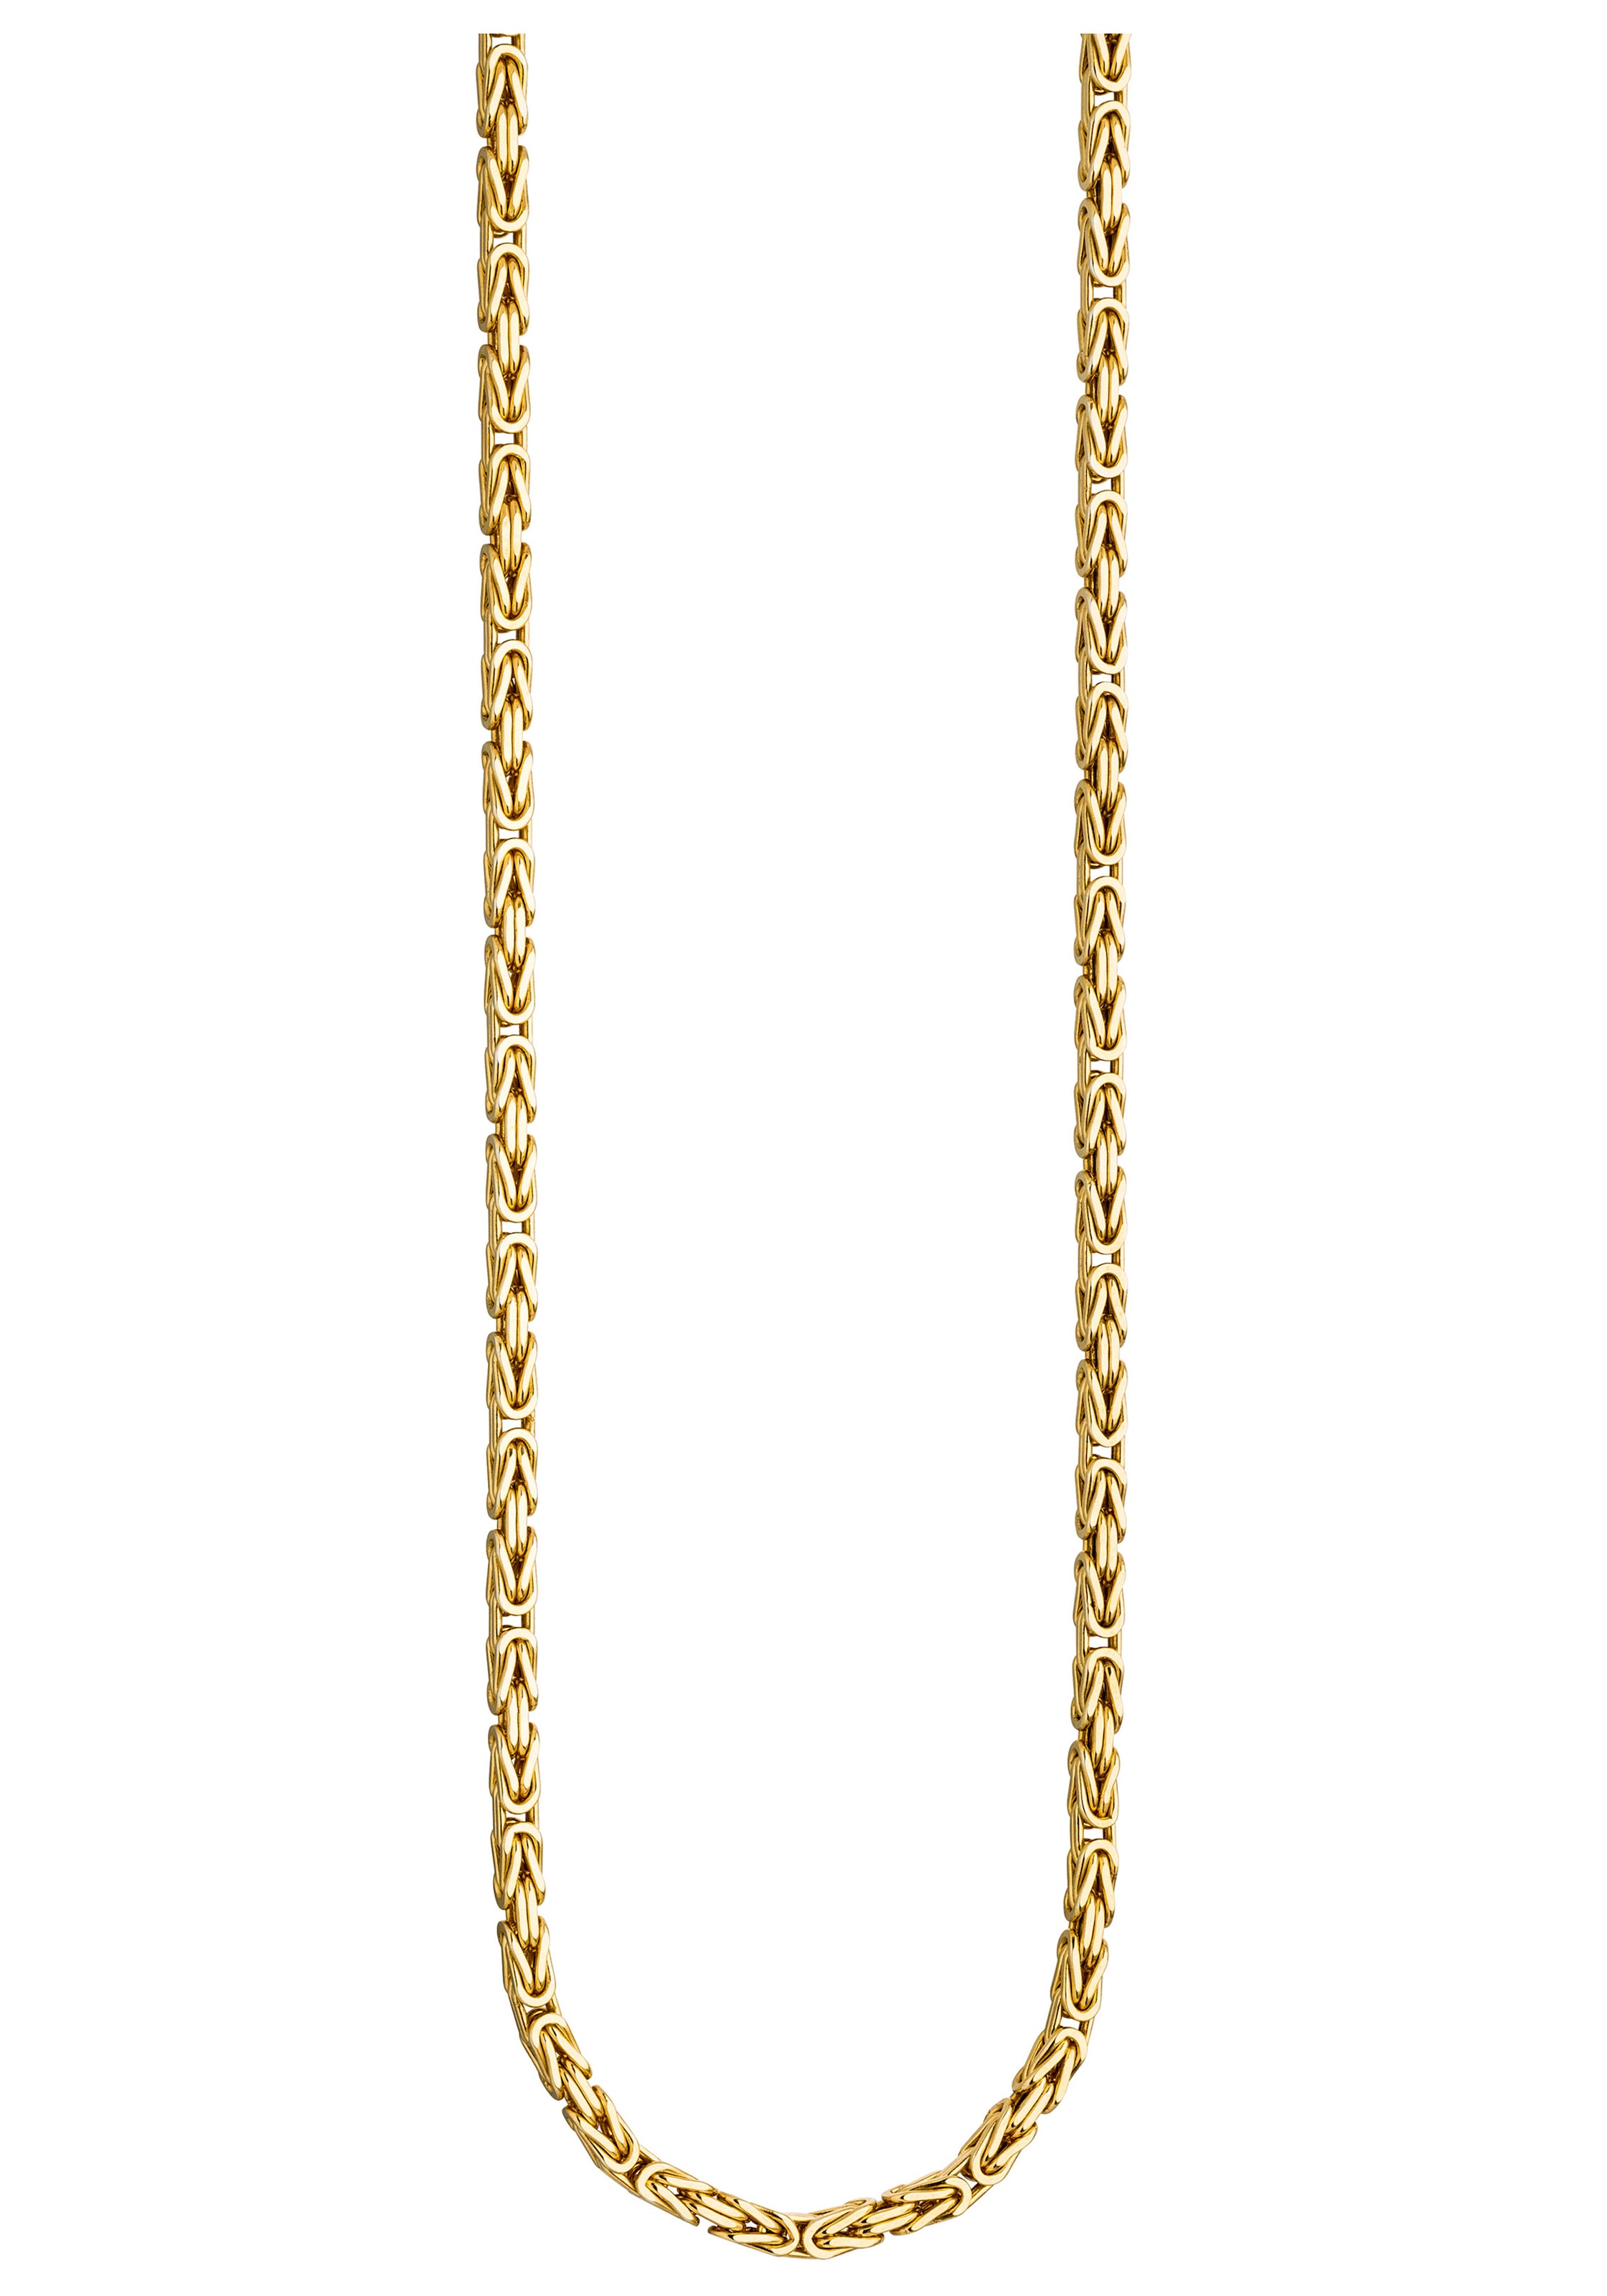 JOBO Kette ohne Anhänger, Königskette 925 Silber vergoldet 60 cm